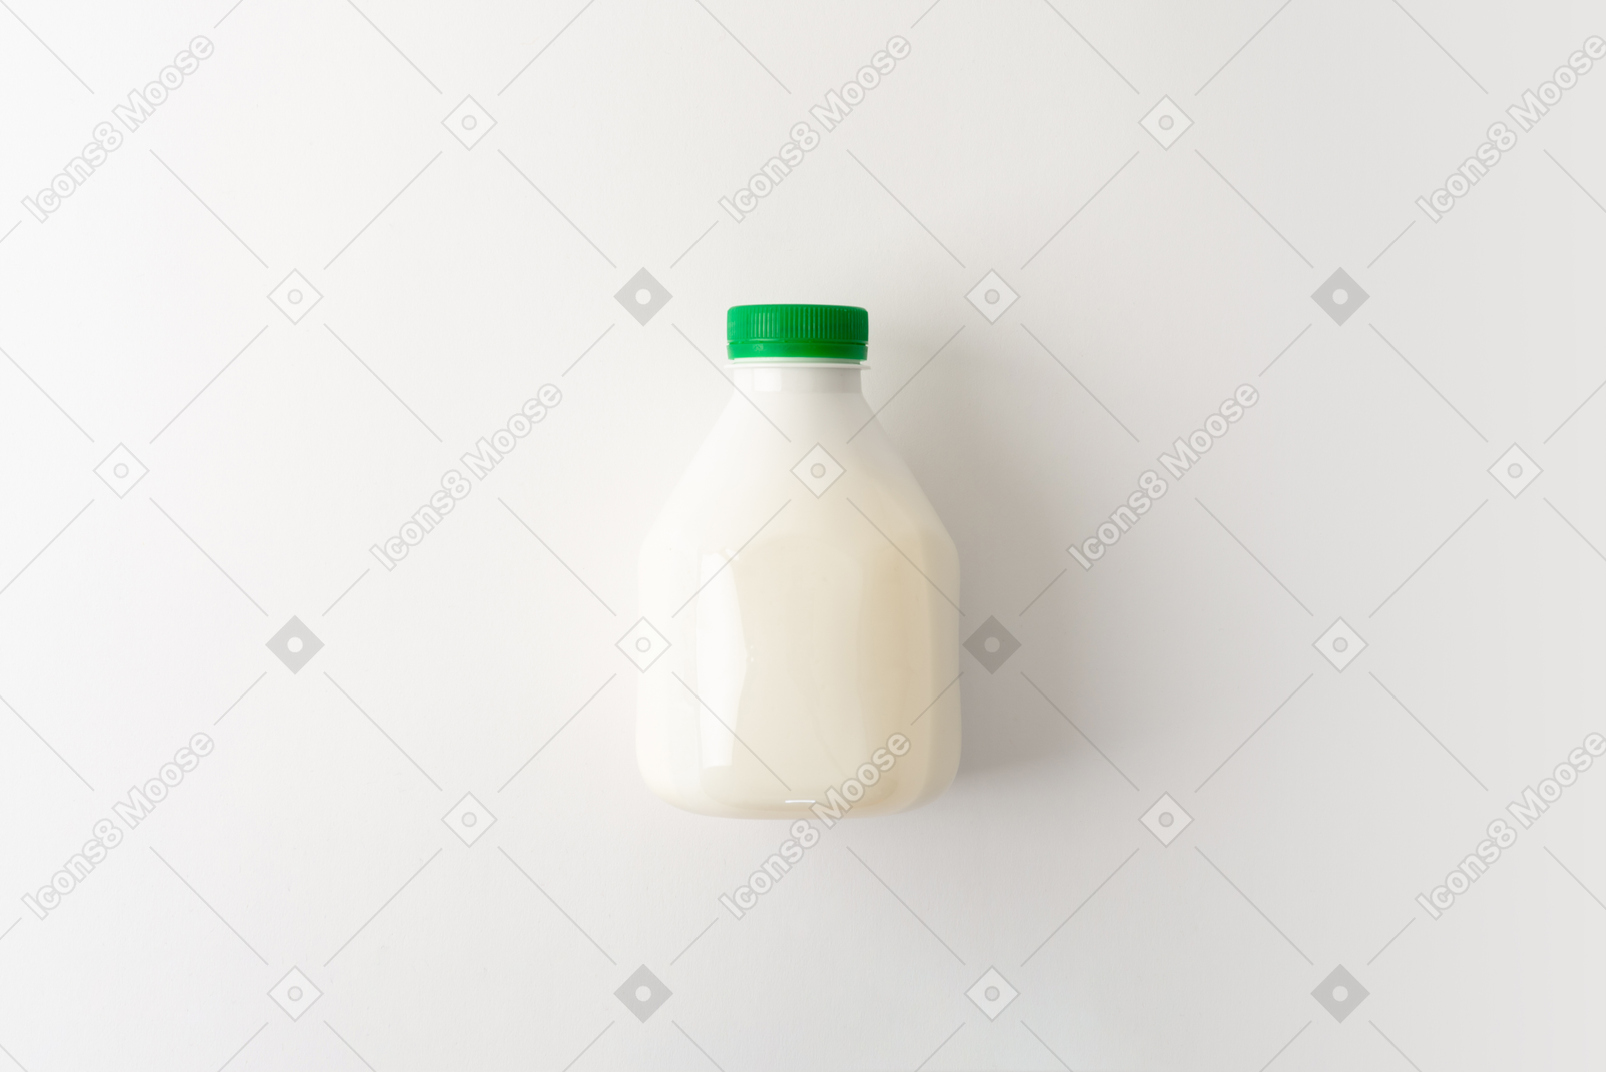 Pequena garrafa de plástico com alguns produtos lácteos dentro